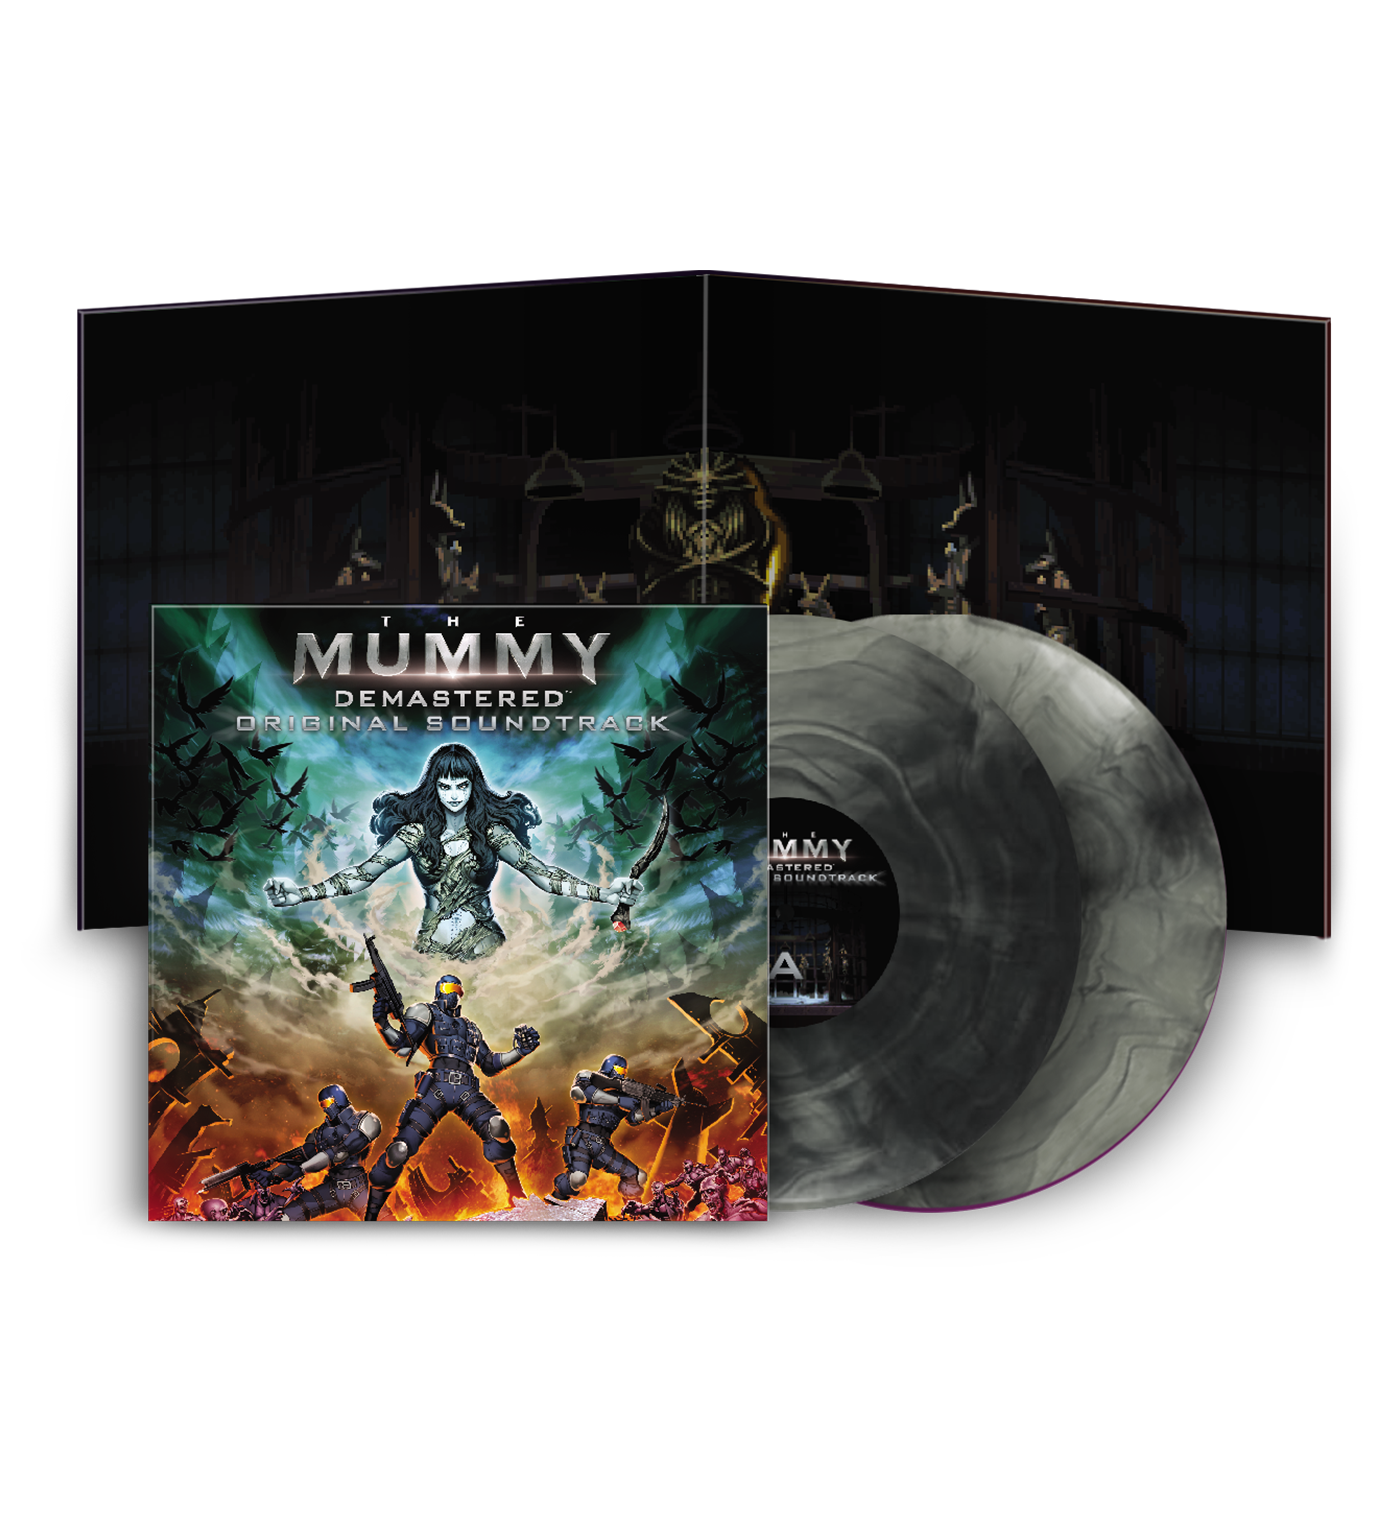 The Mummy Demastered 2LP Soundtrack Vinyl